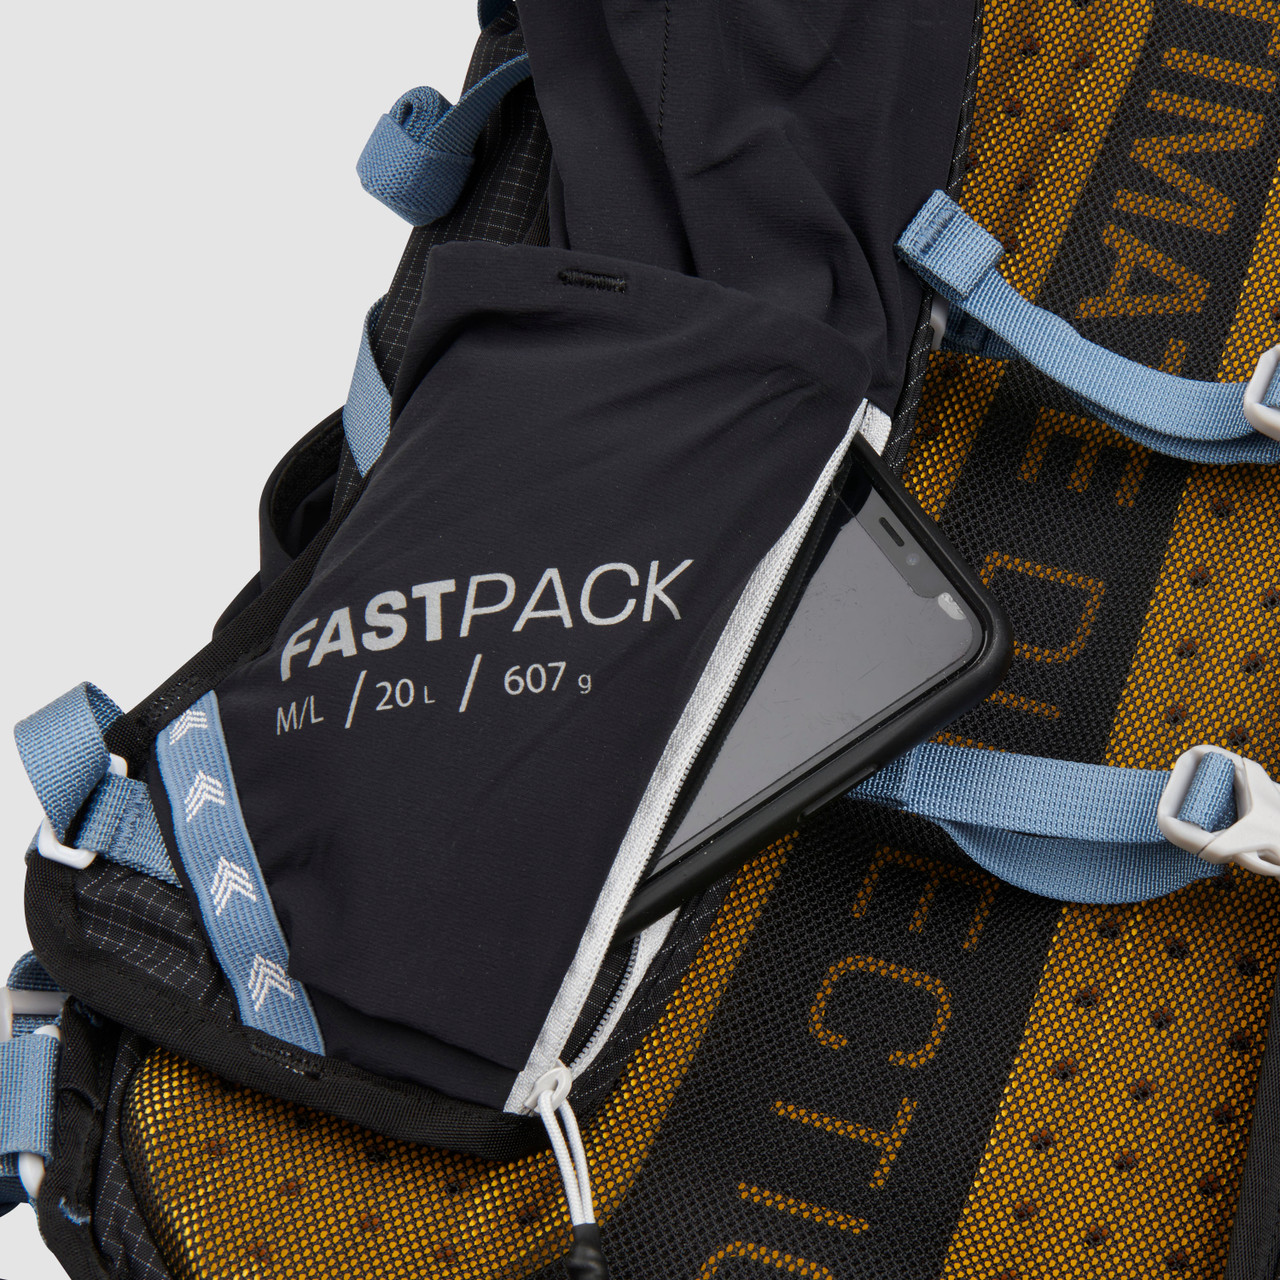 Fastpack 20 | Ultimate Direction